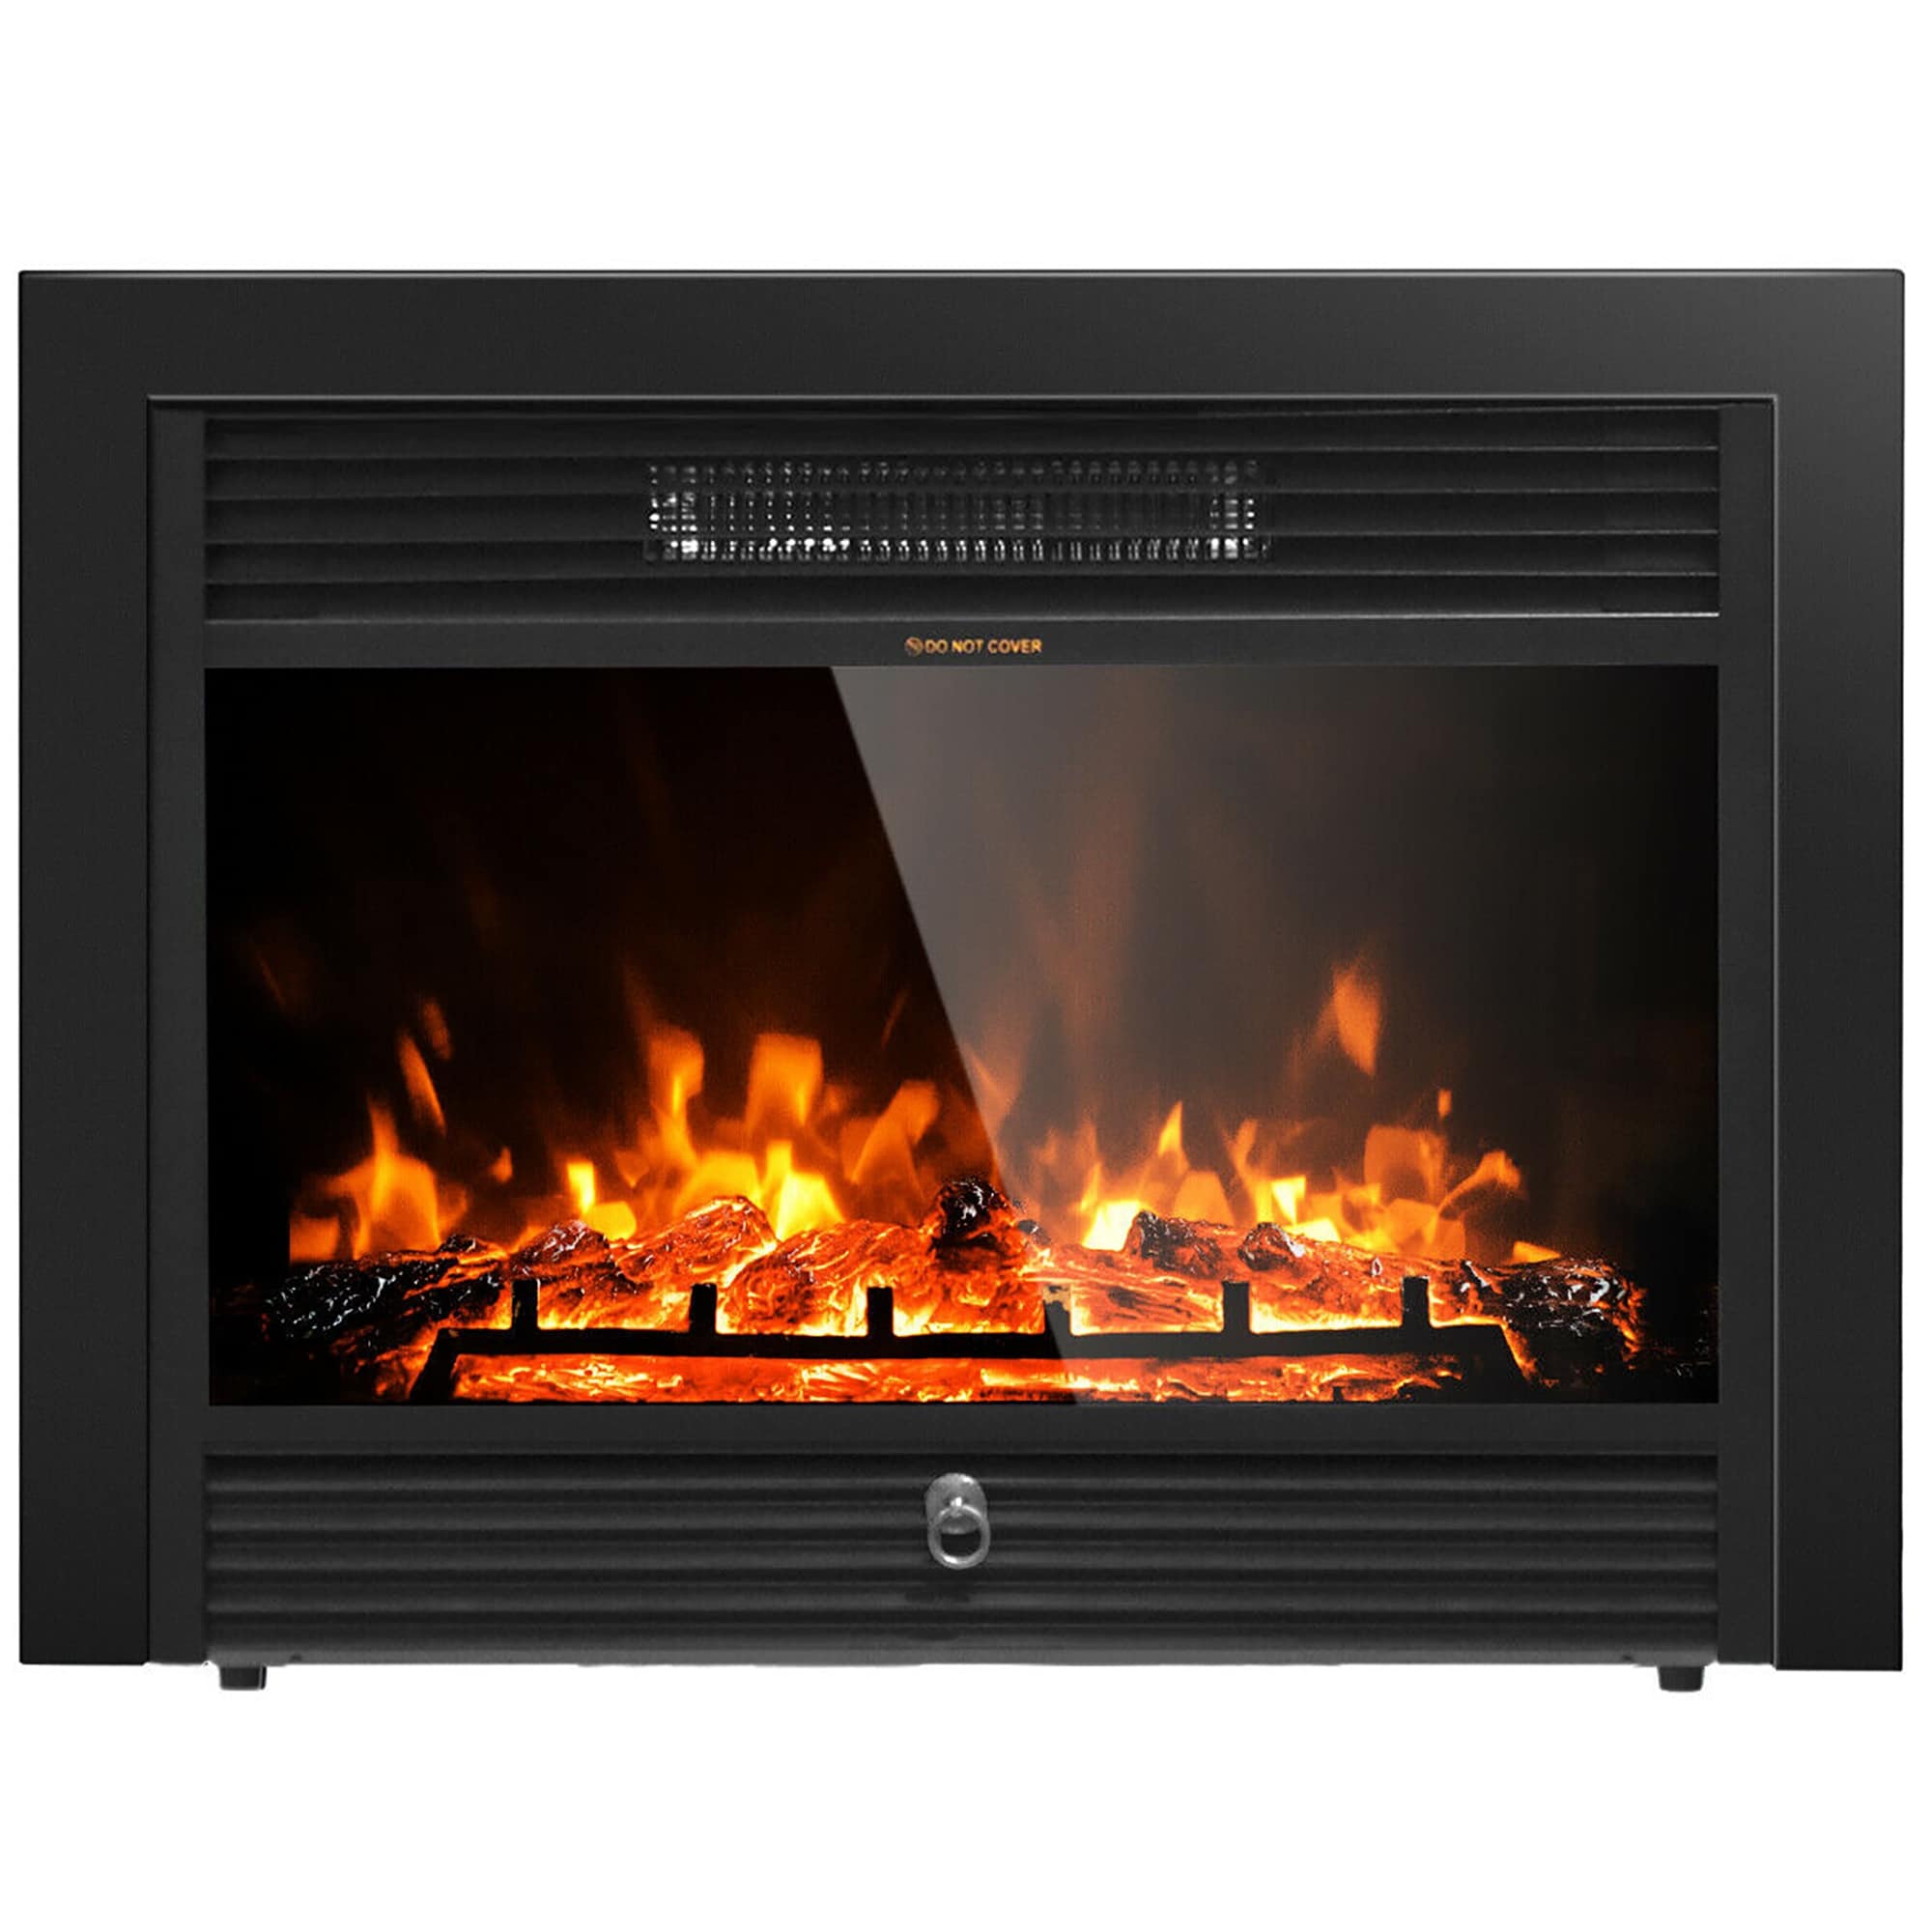 750-1500W Electric Adjustable Heater Fireplace